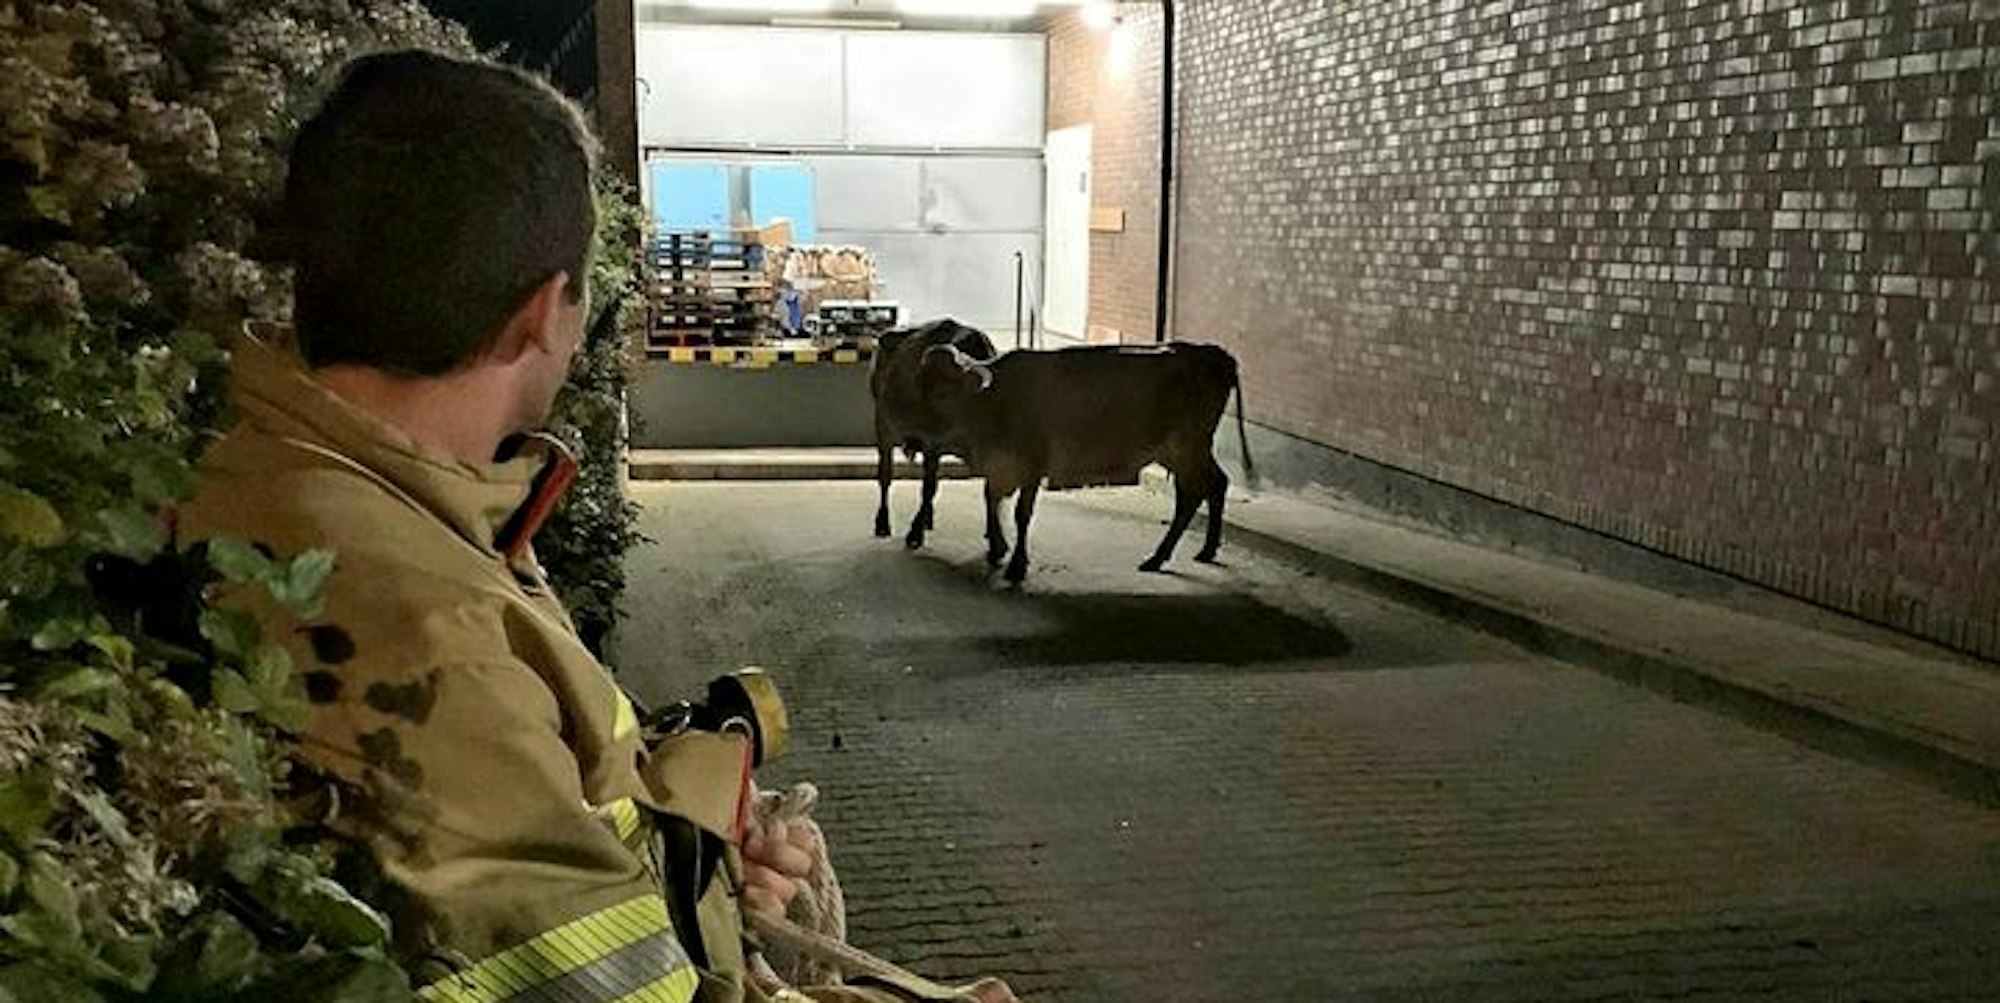 Kühe in Alsdorf werden eingefangen